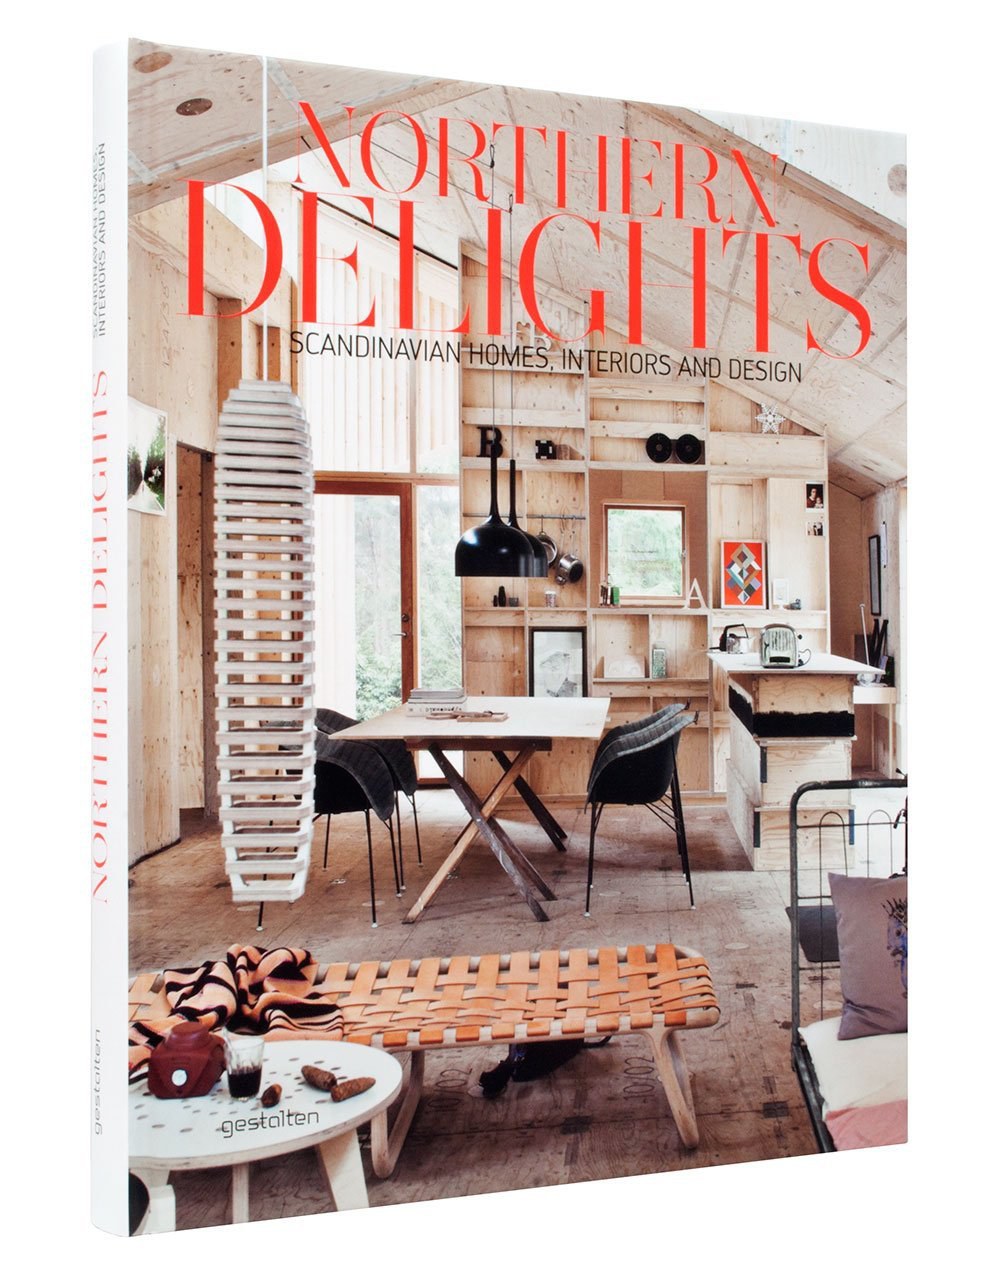 Northern delights : Scandinavian homes, interiors and design /